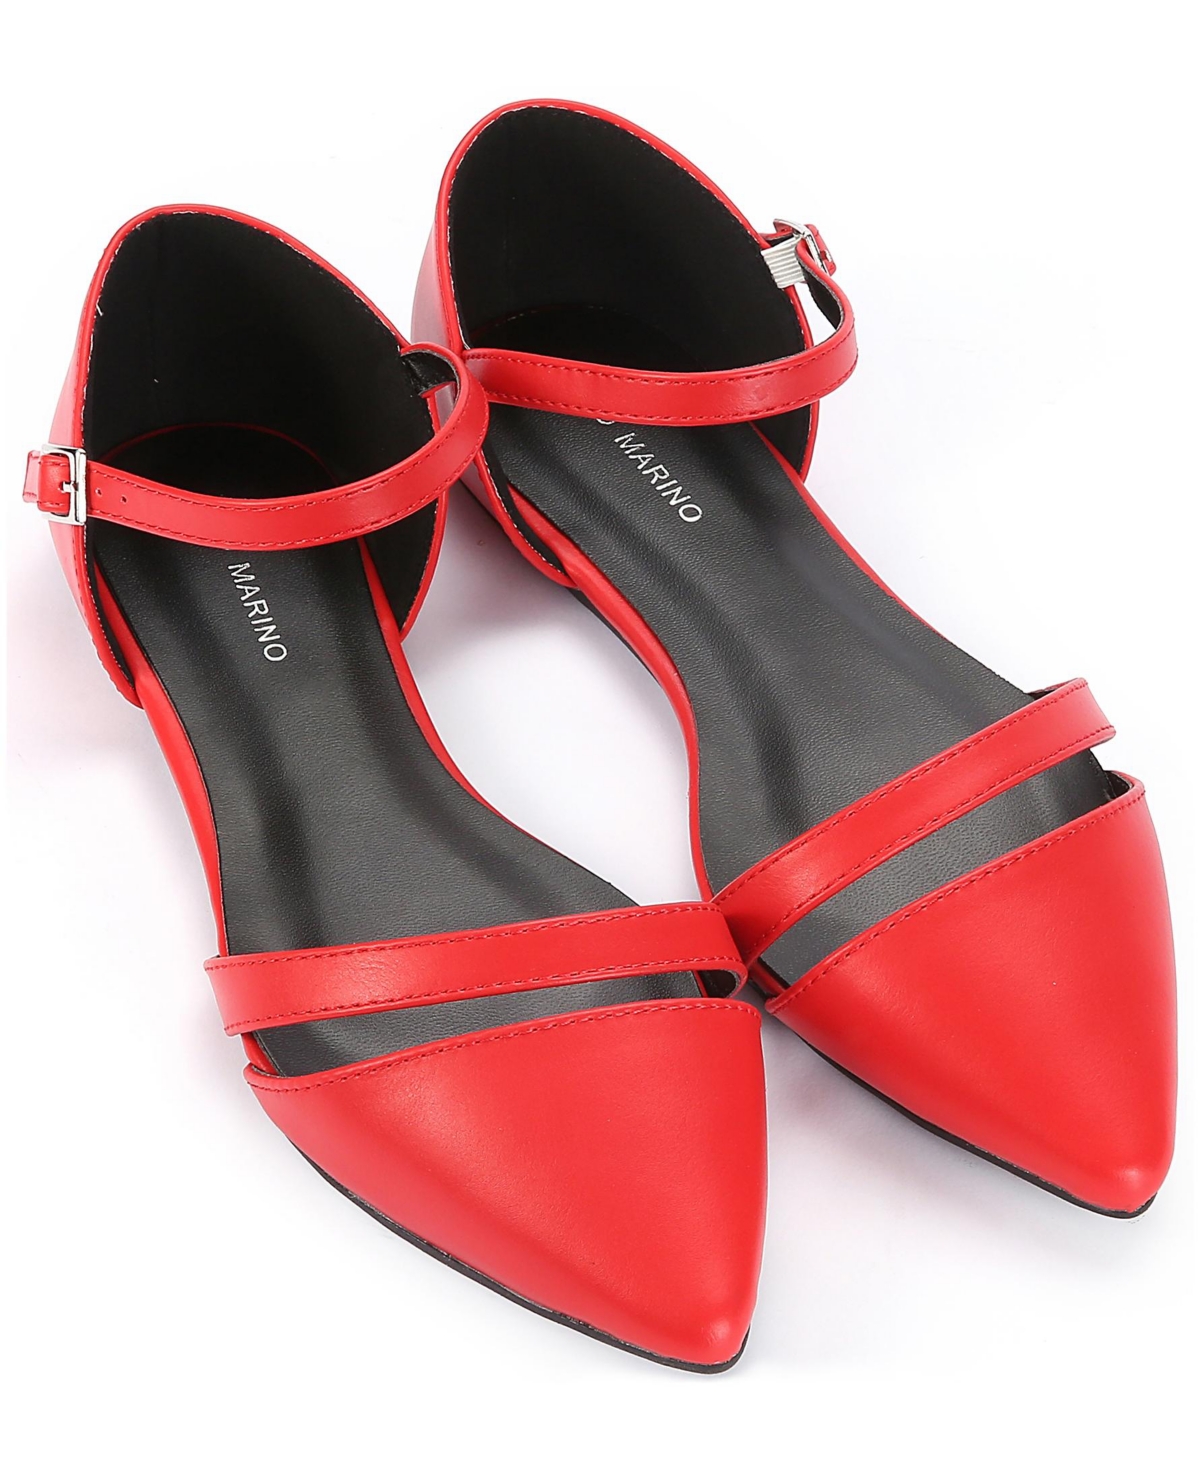 Women's Formal Flat Dress Shoes - Red